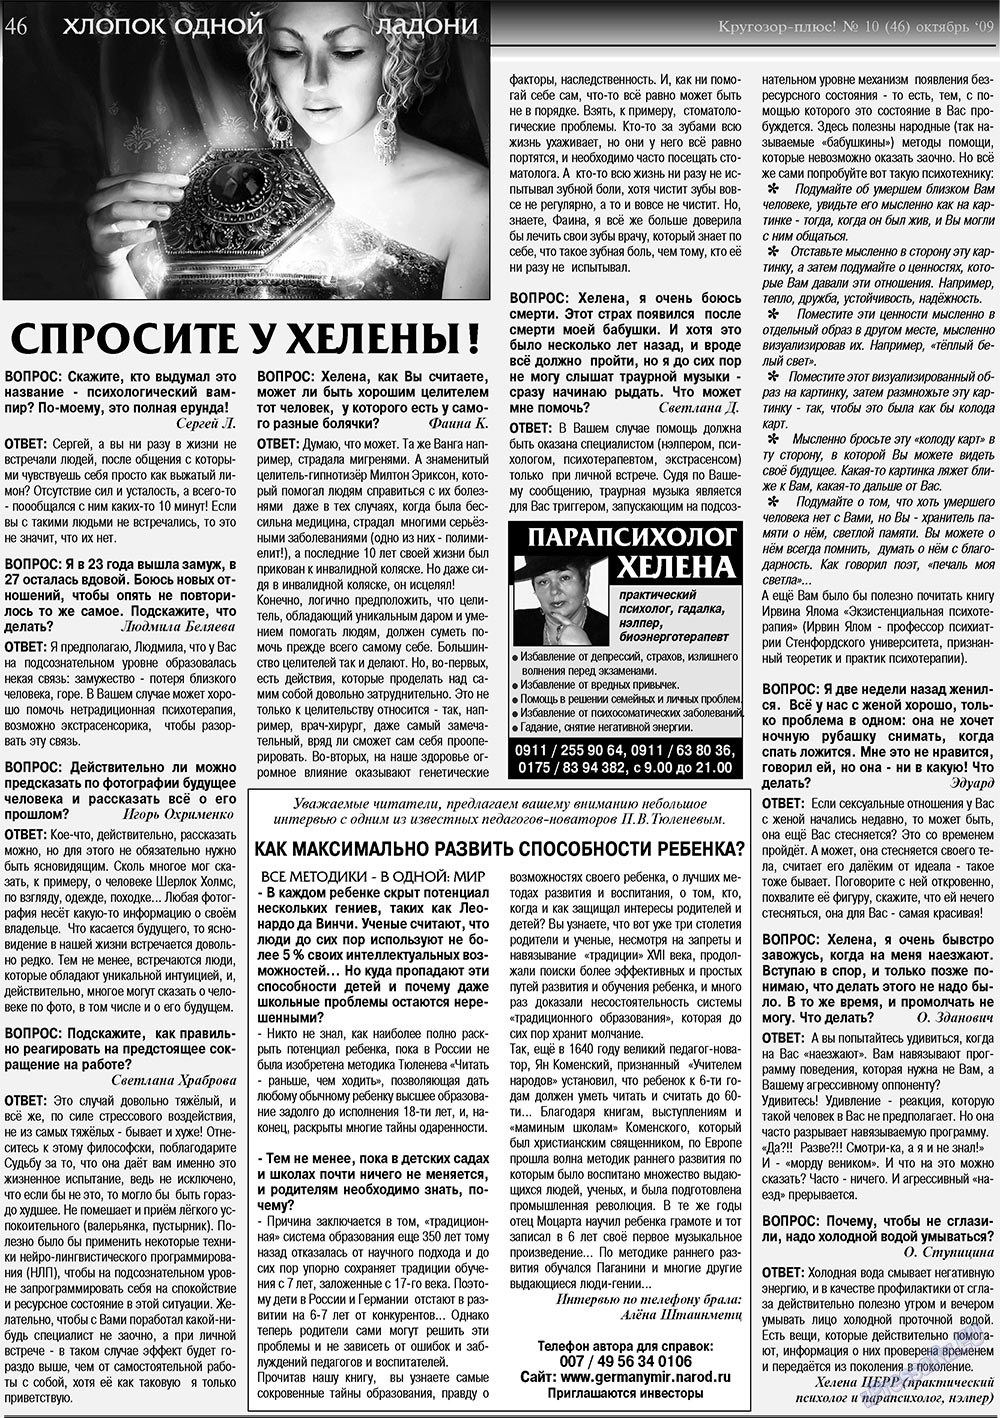 Кругозор плюс! (газета). 2009 год, номер 10, стр. 46